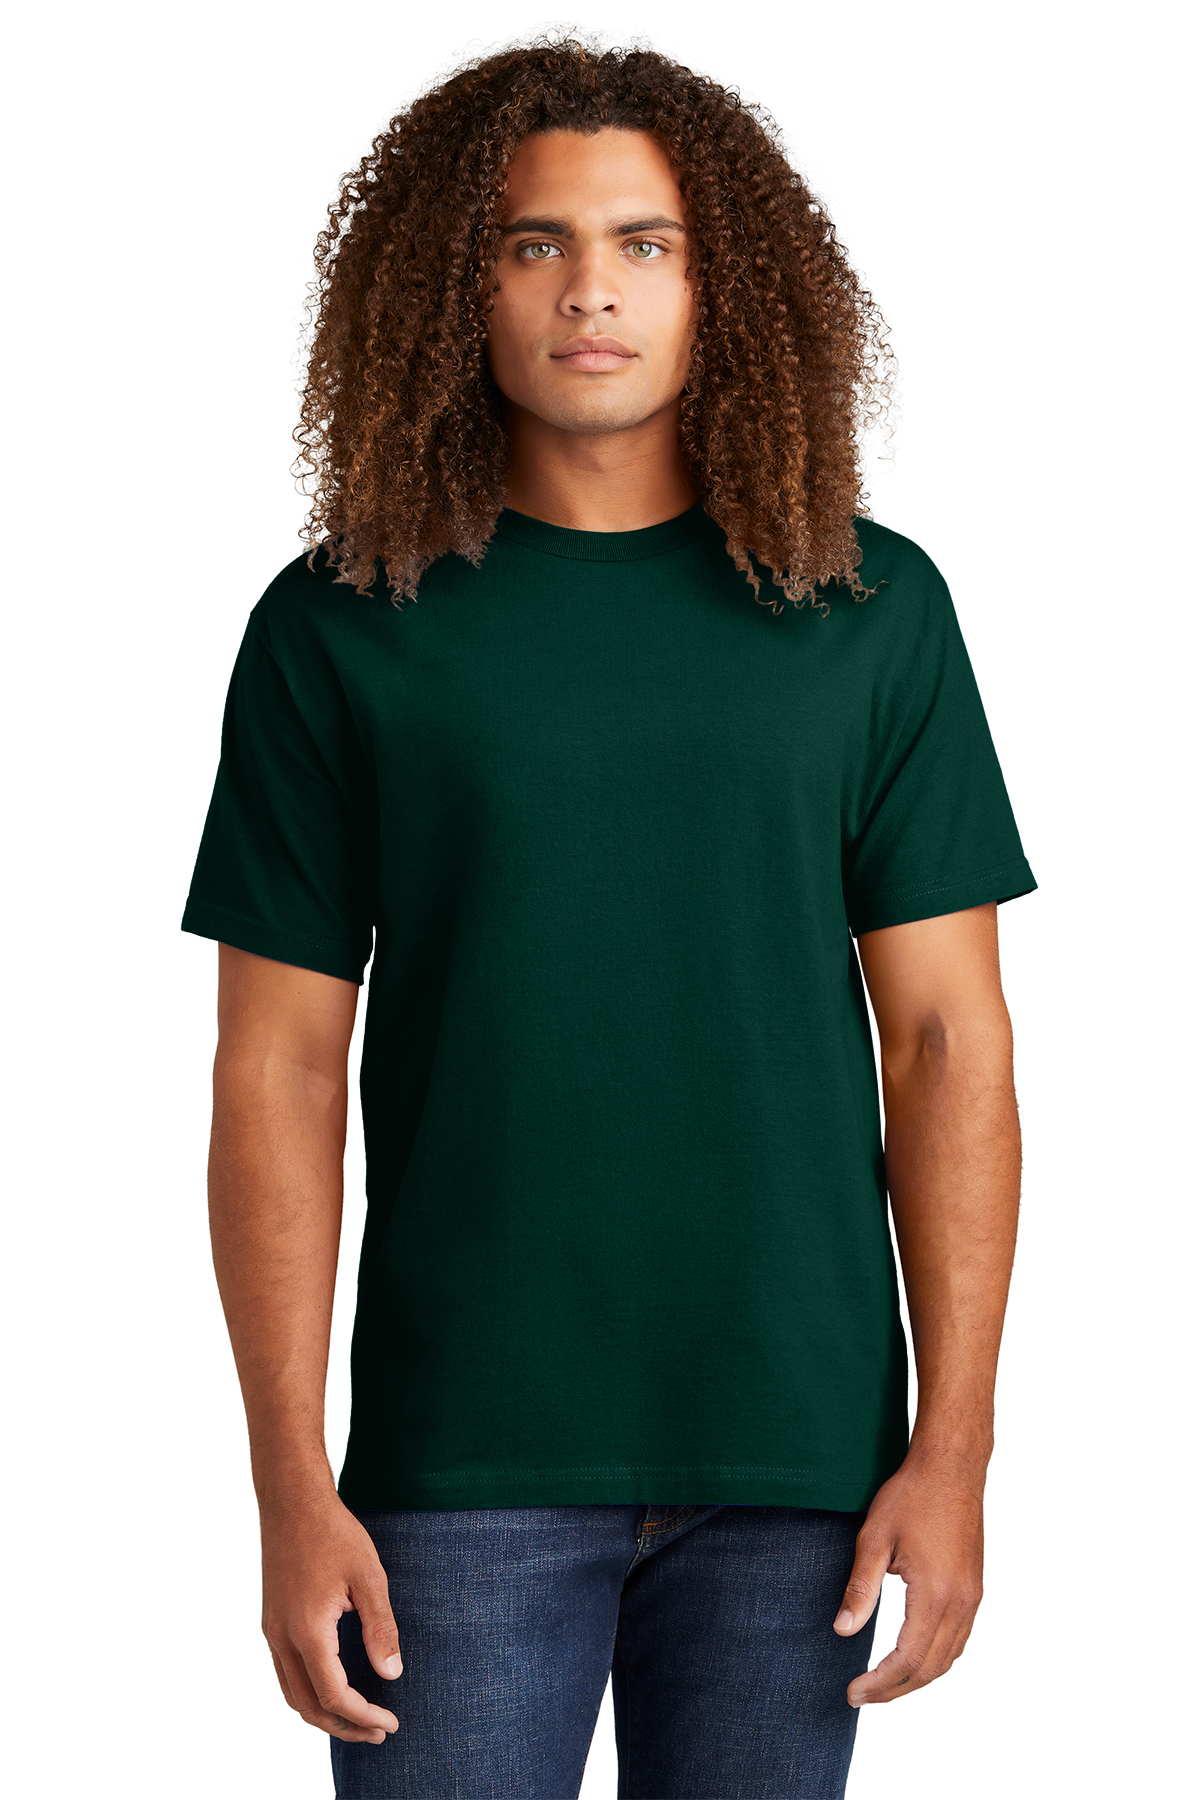 Underinddel Fancy vært American Apparel Heavyweight Unisex T-Shirt | Product | SanMar